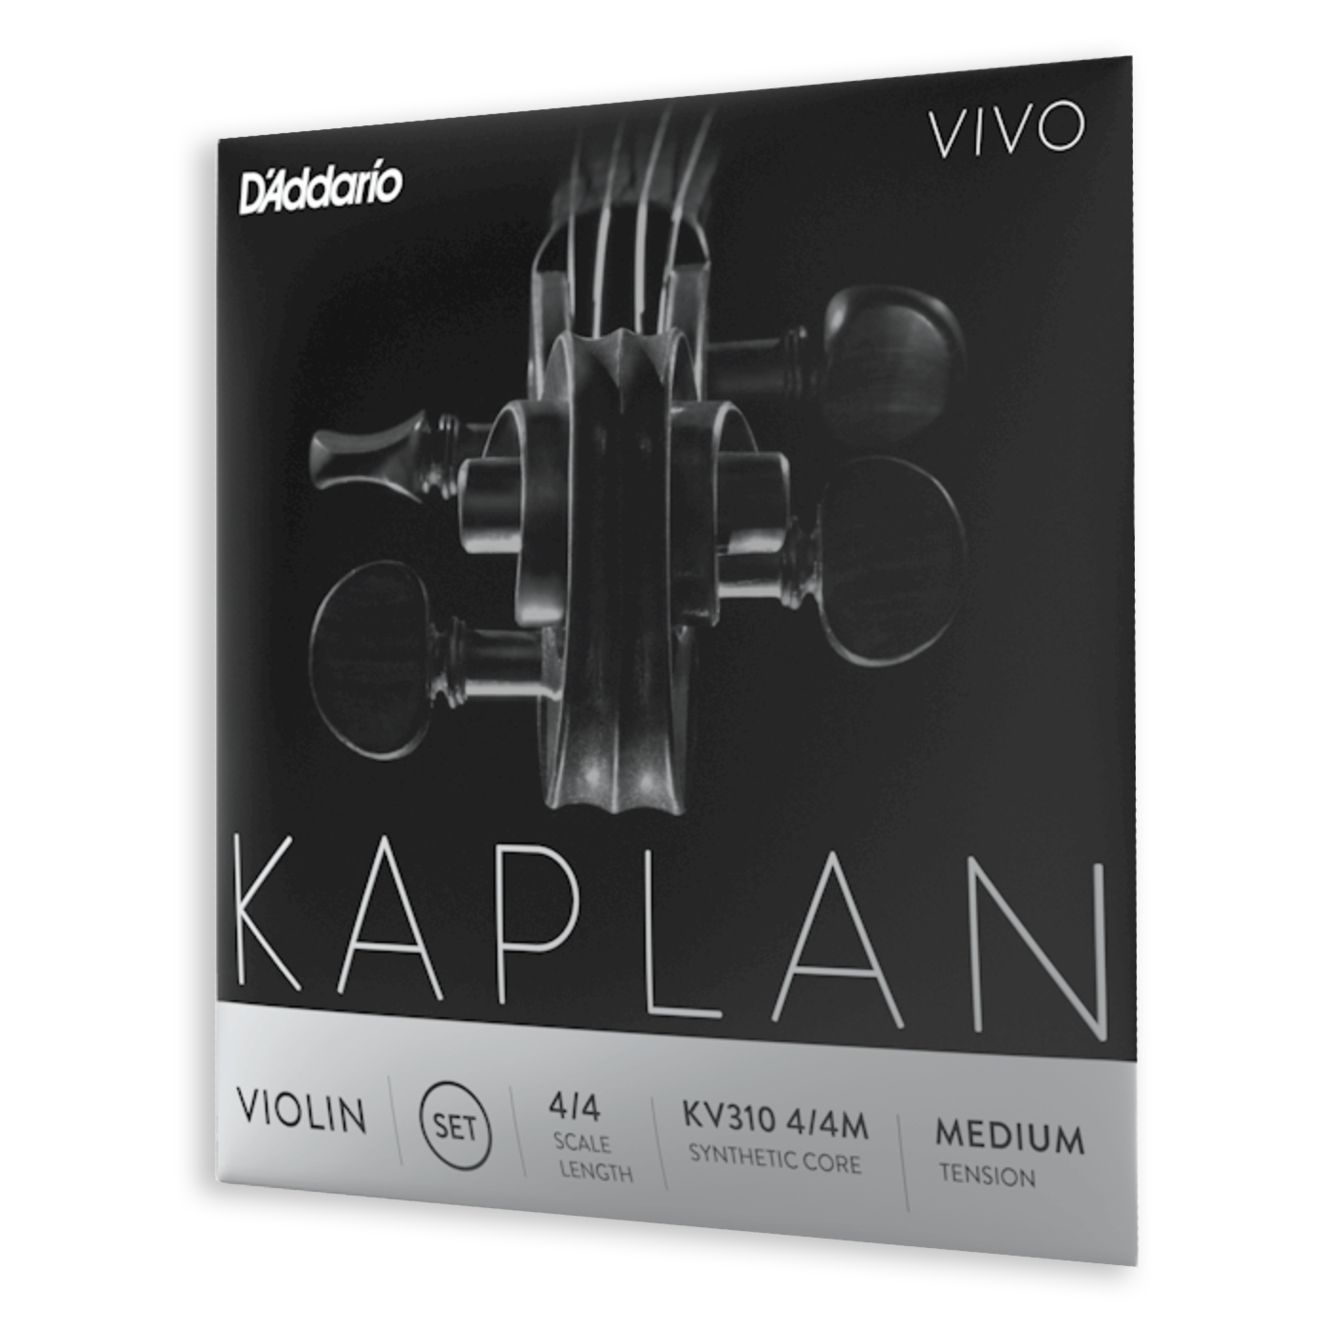 Kaplan Vivo Violin A string